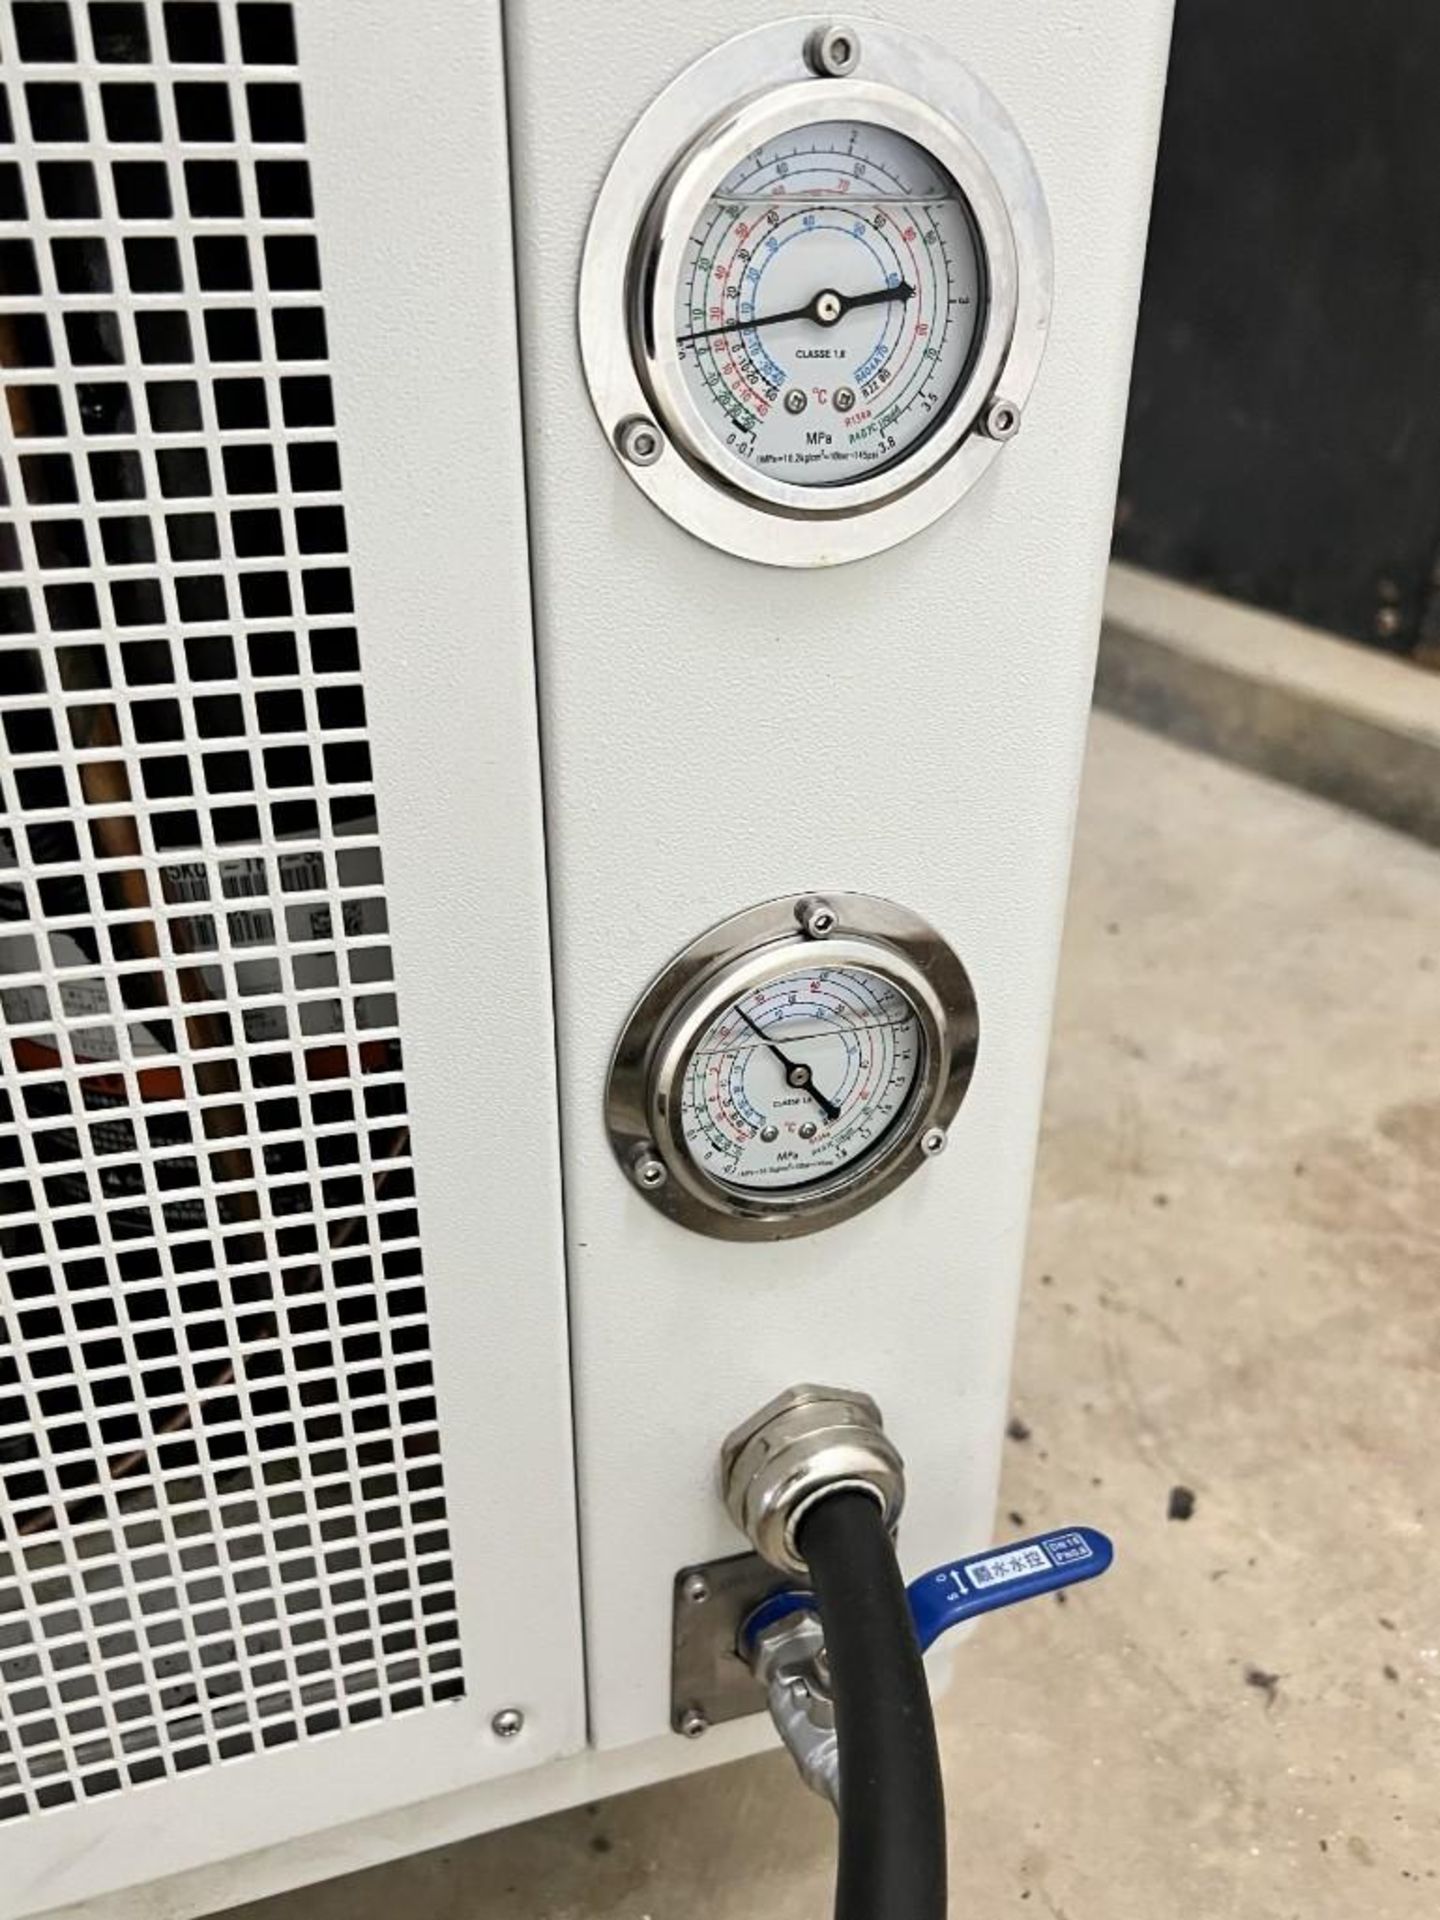 YHCHEM Heating & Cooling Circulator, Model YHR-100T, Built 06/2019. - Image 4 of 7